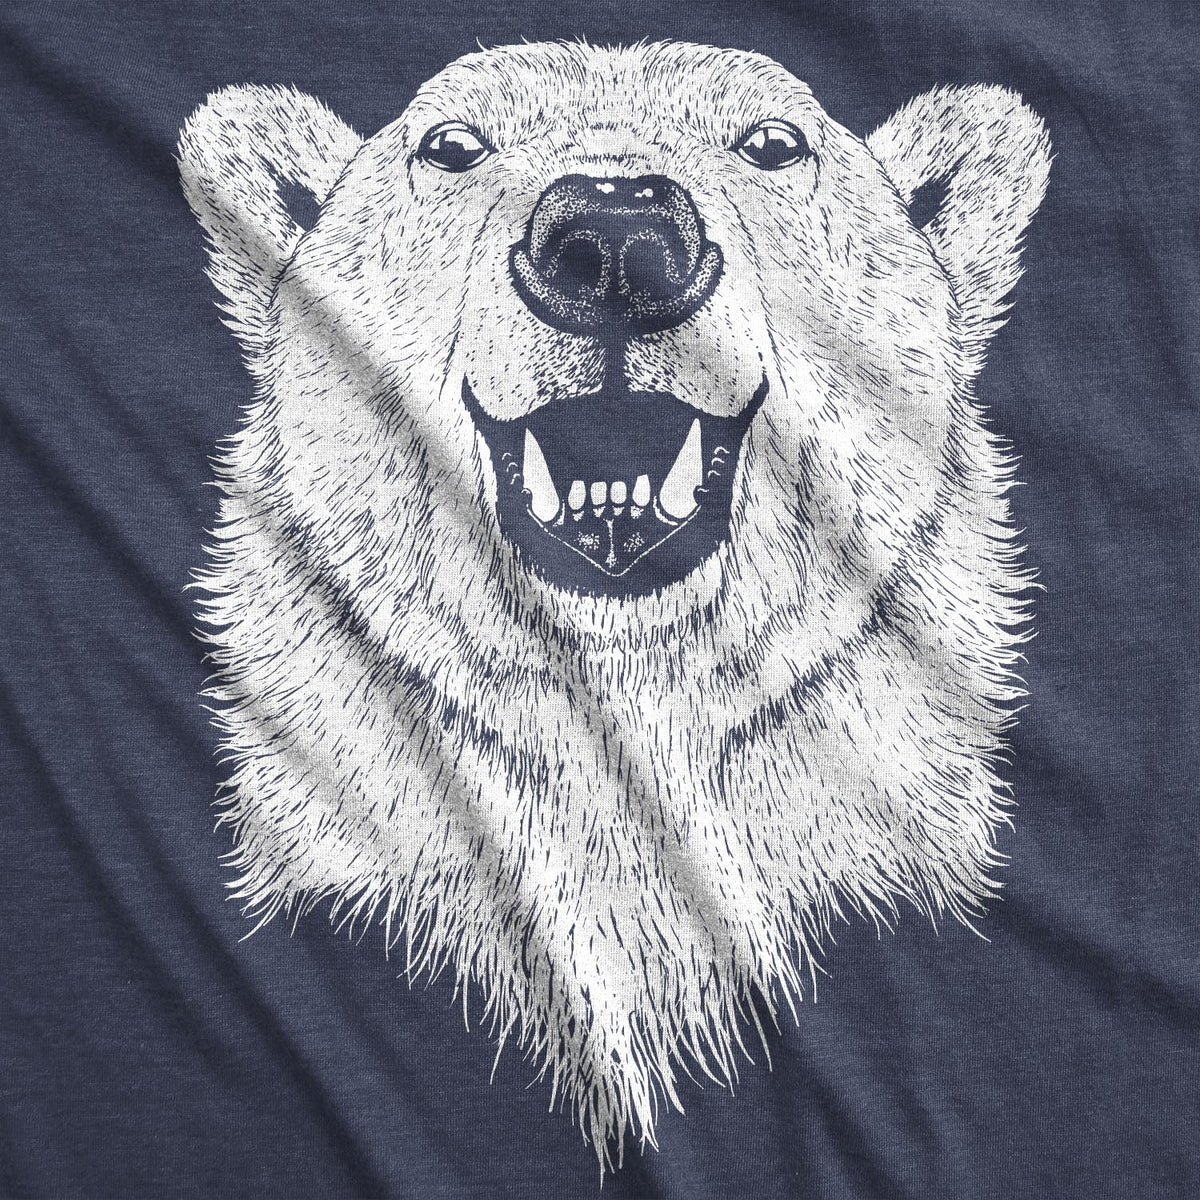 Ask Me About My Polar Bear Flip Youth Tshirt